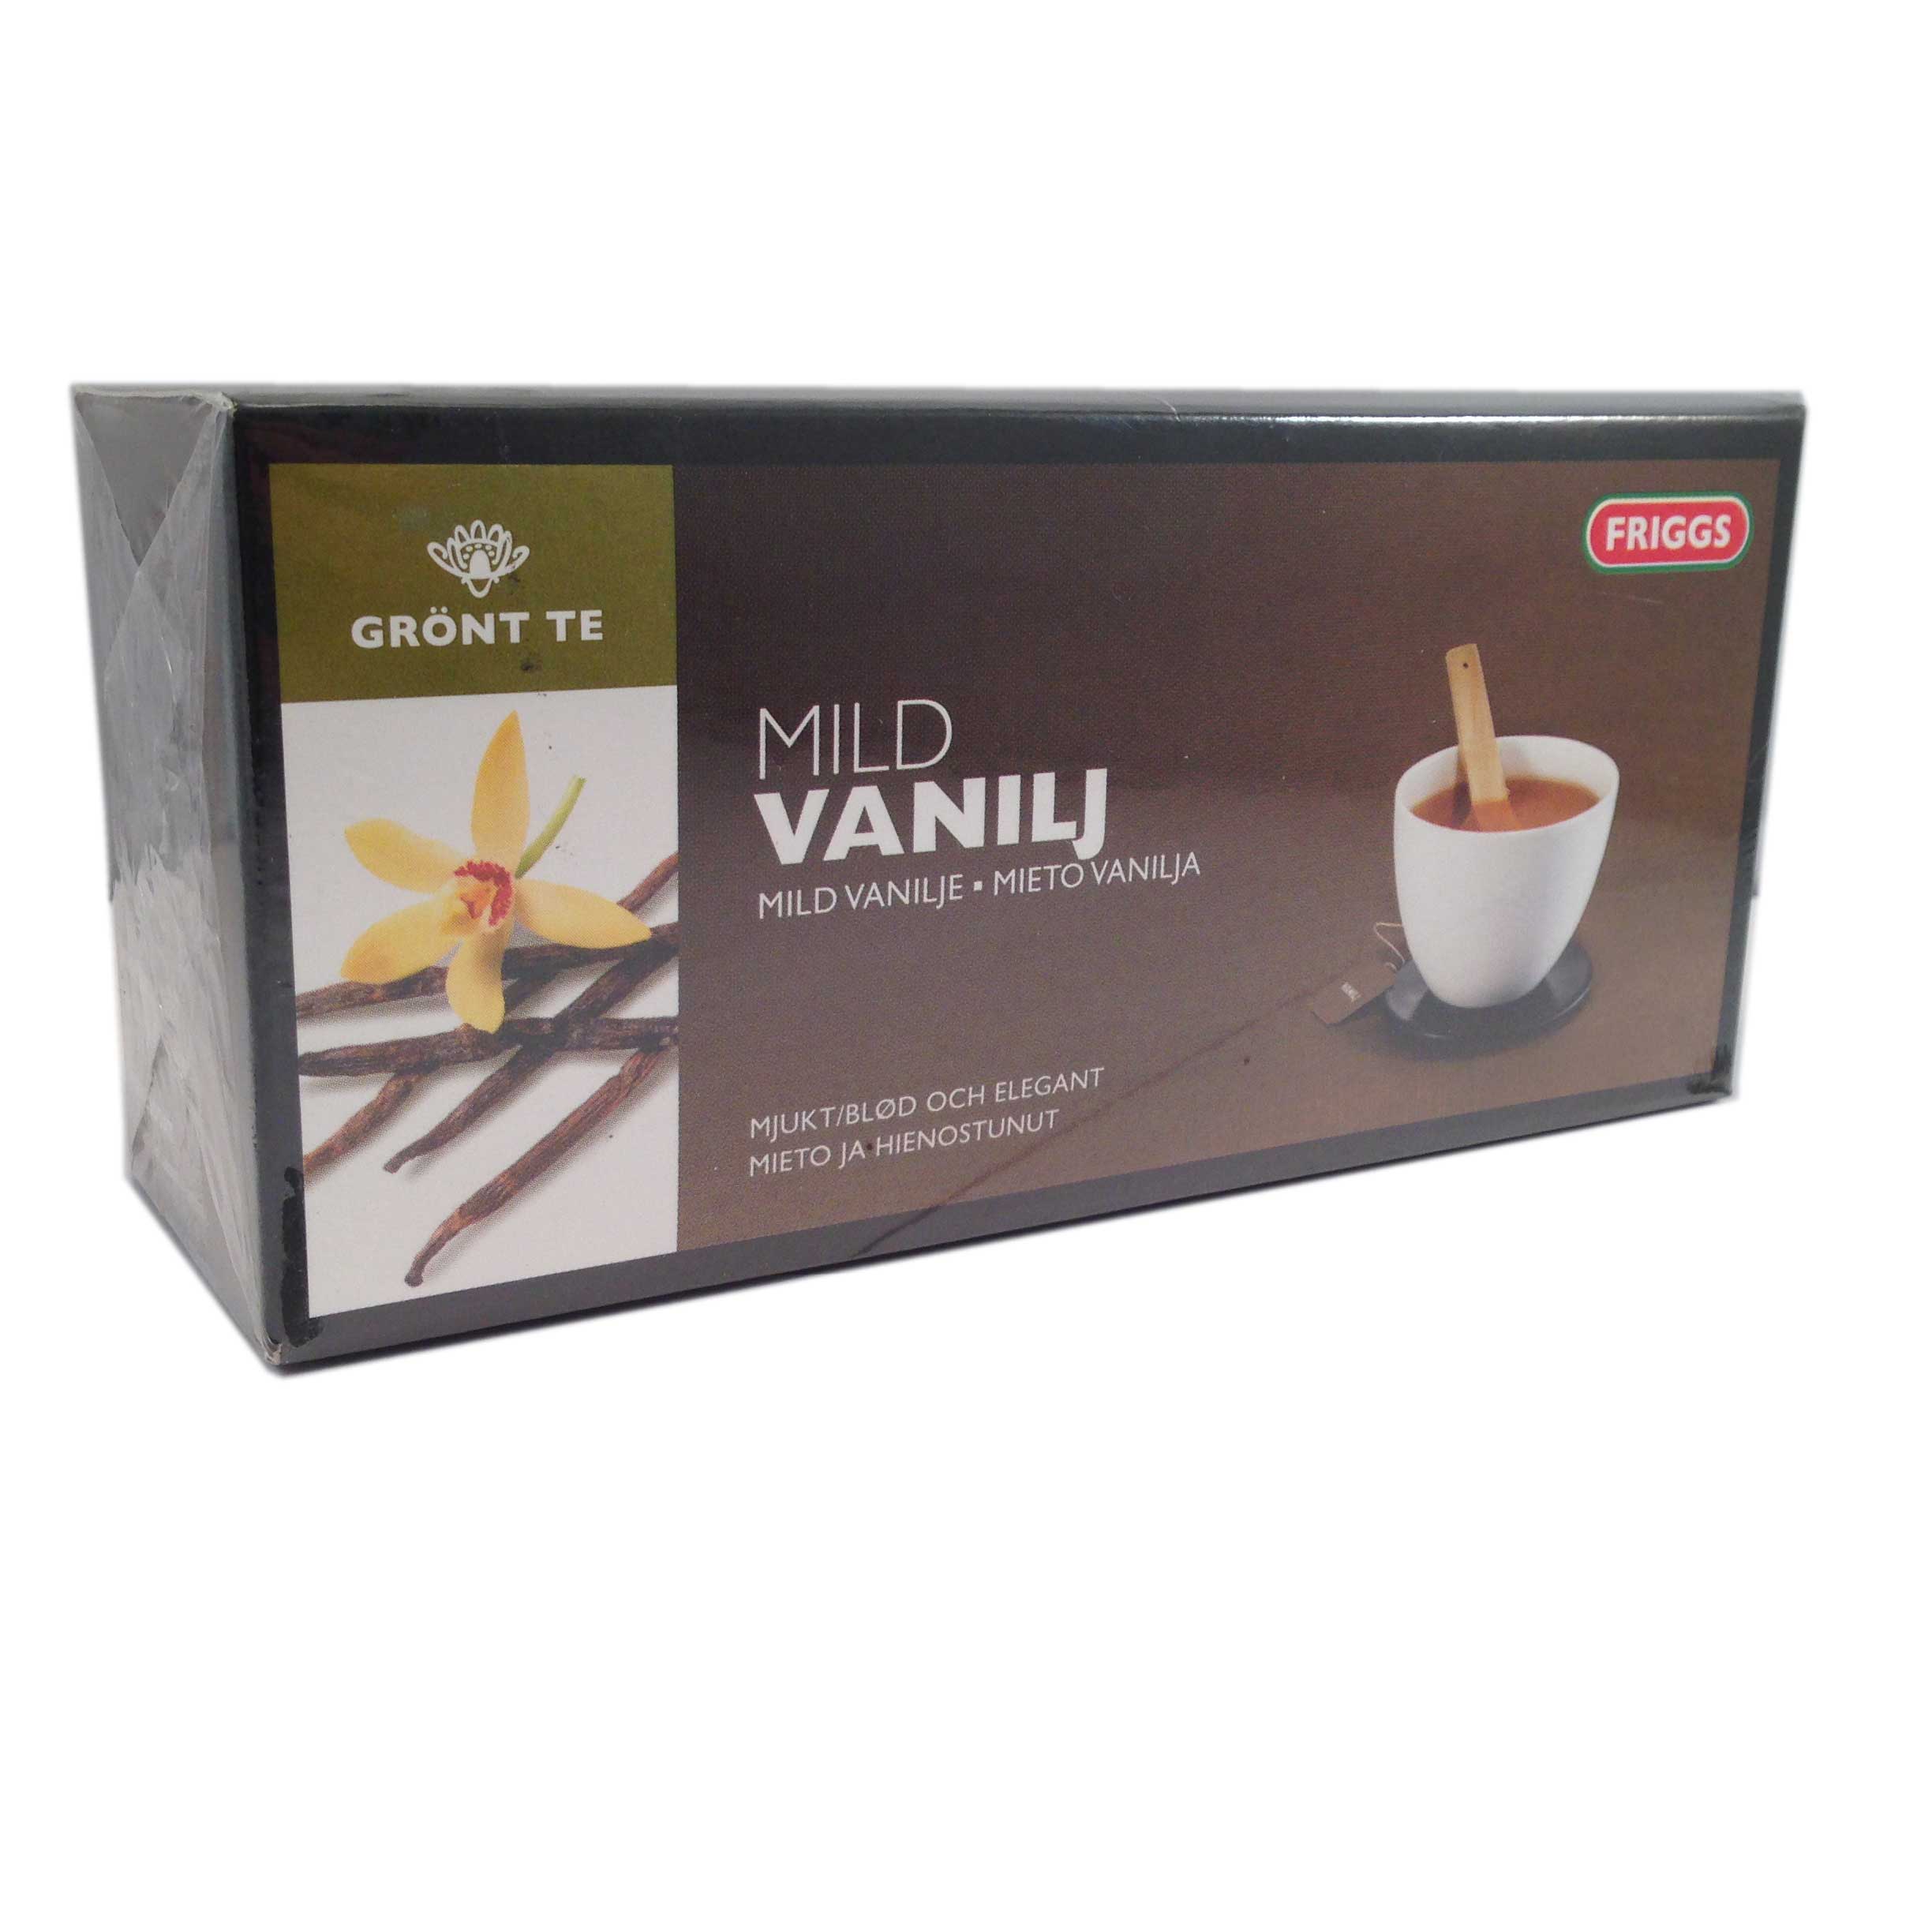 Grönt te mild vanilj - 50% rabatt